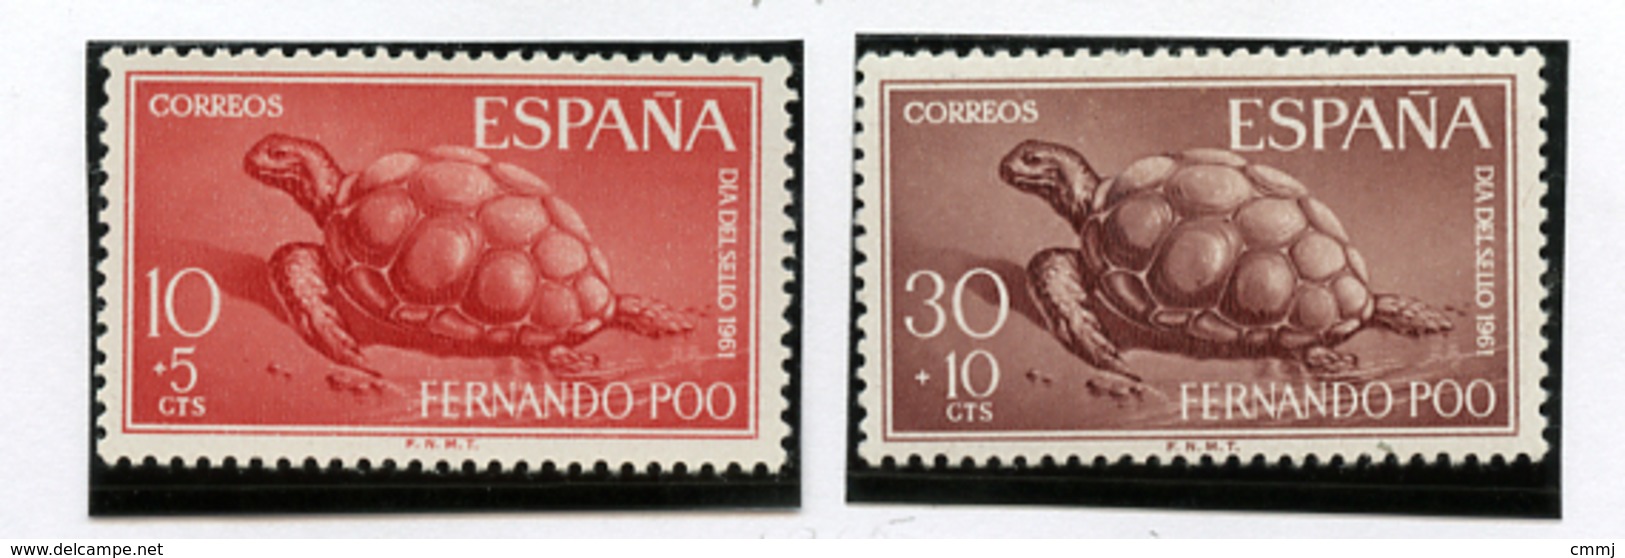 1961 - FERNANDO POO (ESPANA) - Mi. Nr. 199/200 -  LH - (*) - (UP.70.1) - Fernando Po